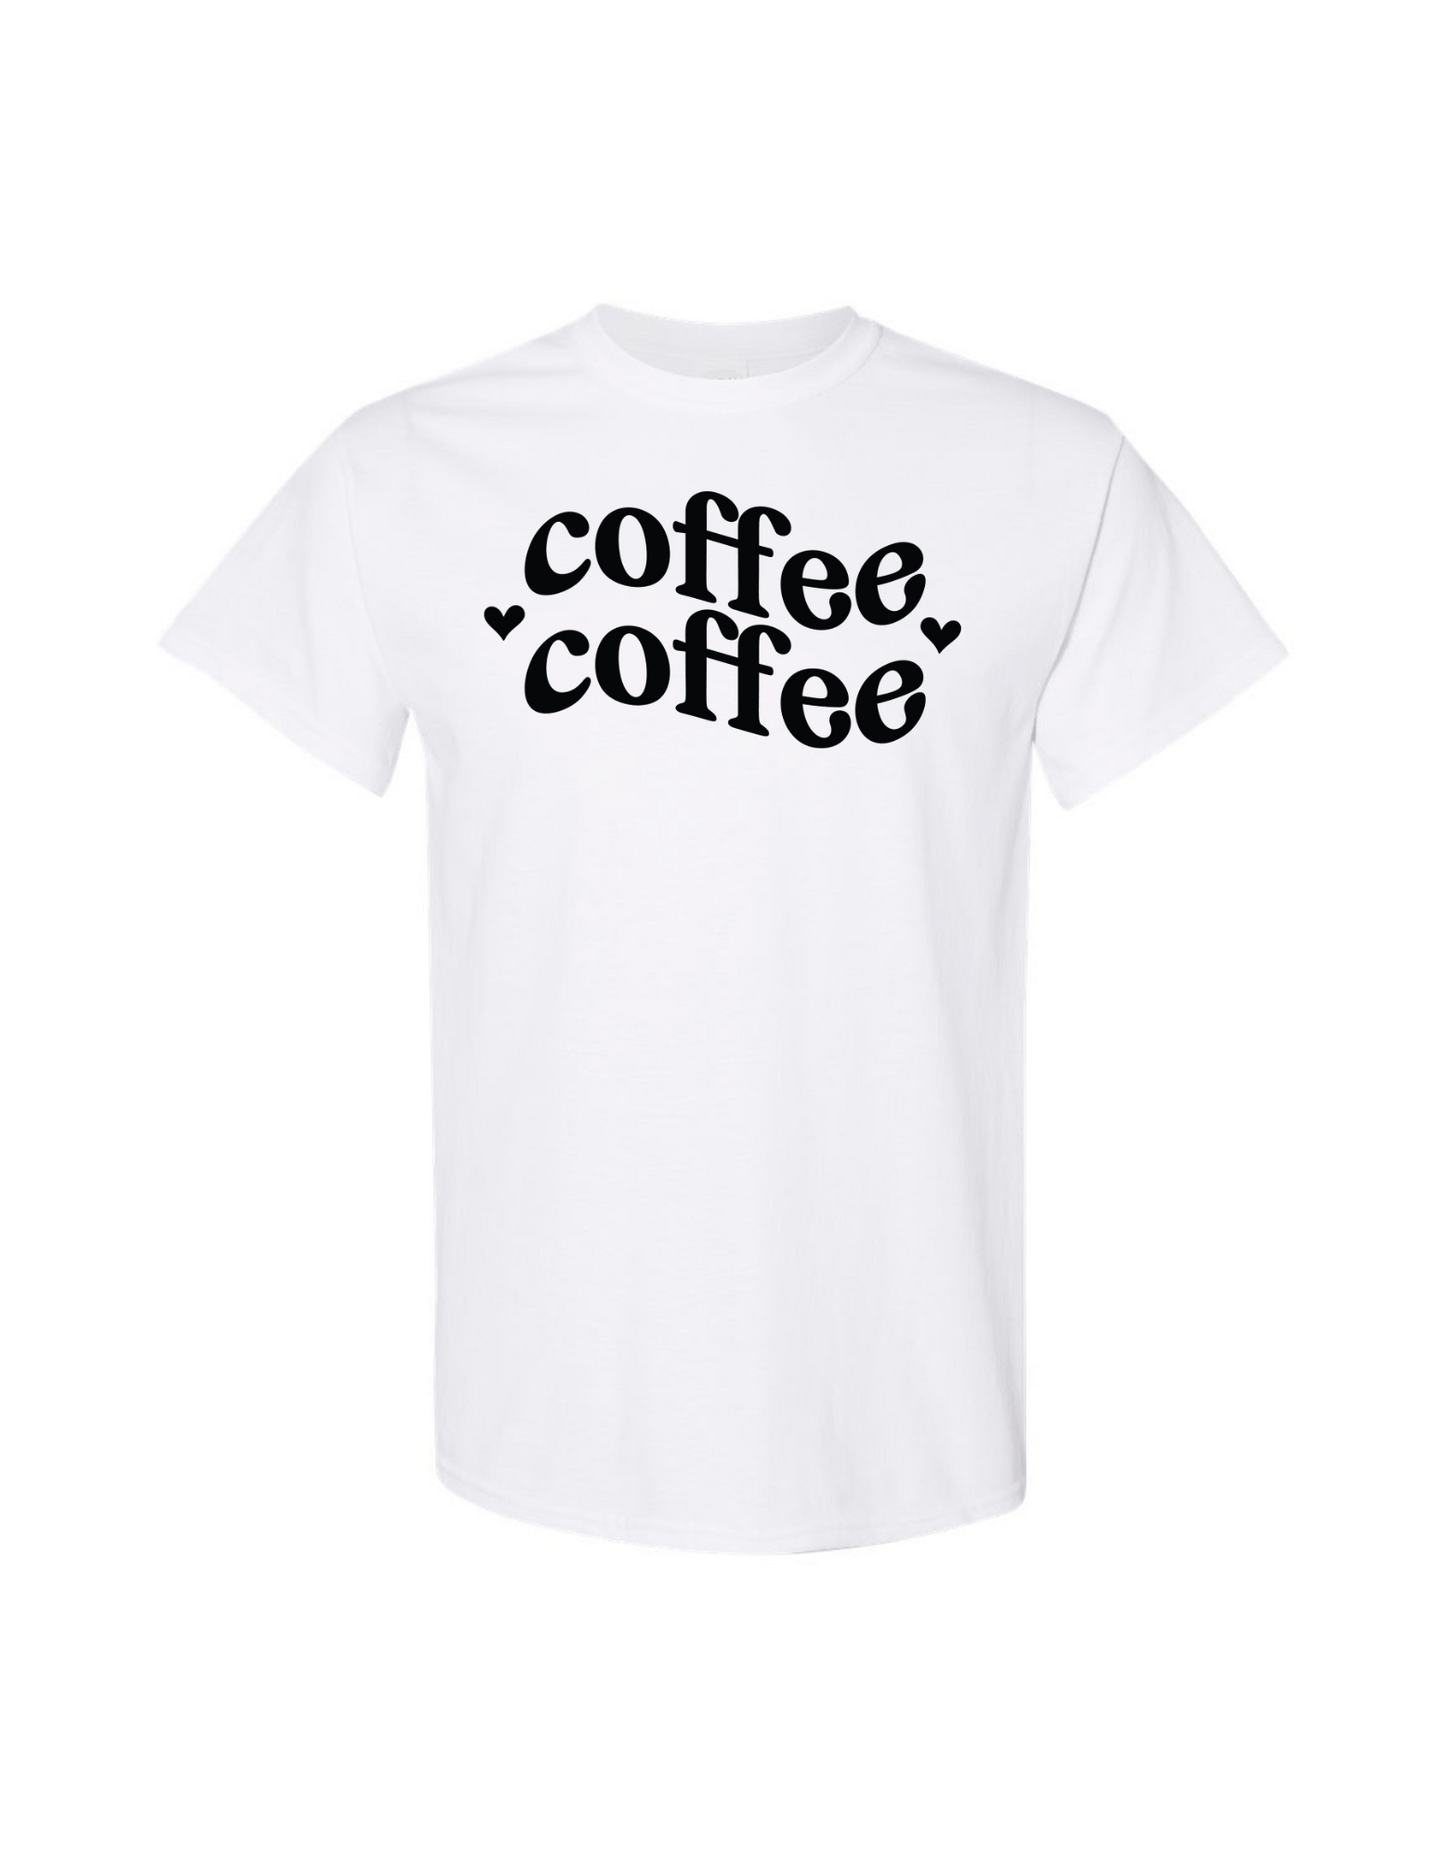 Made to Order Handmade Coffee Coffee Short Sleeve Shirt